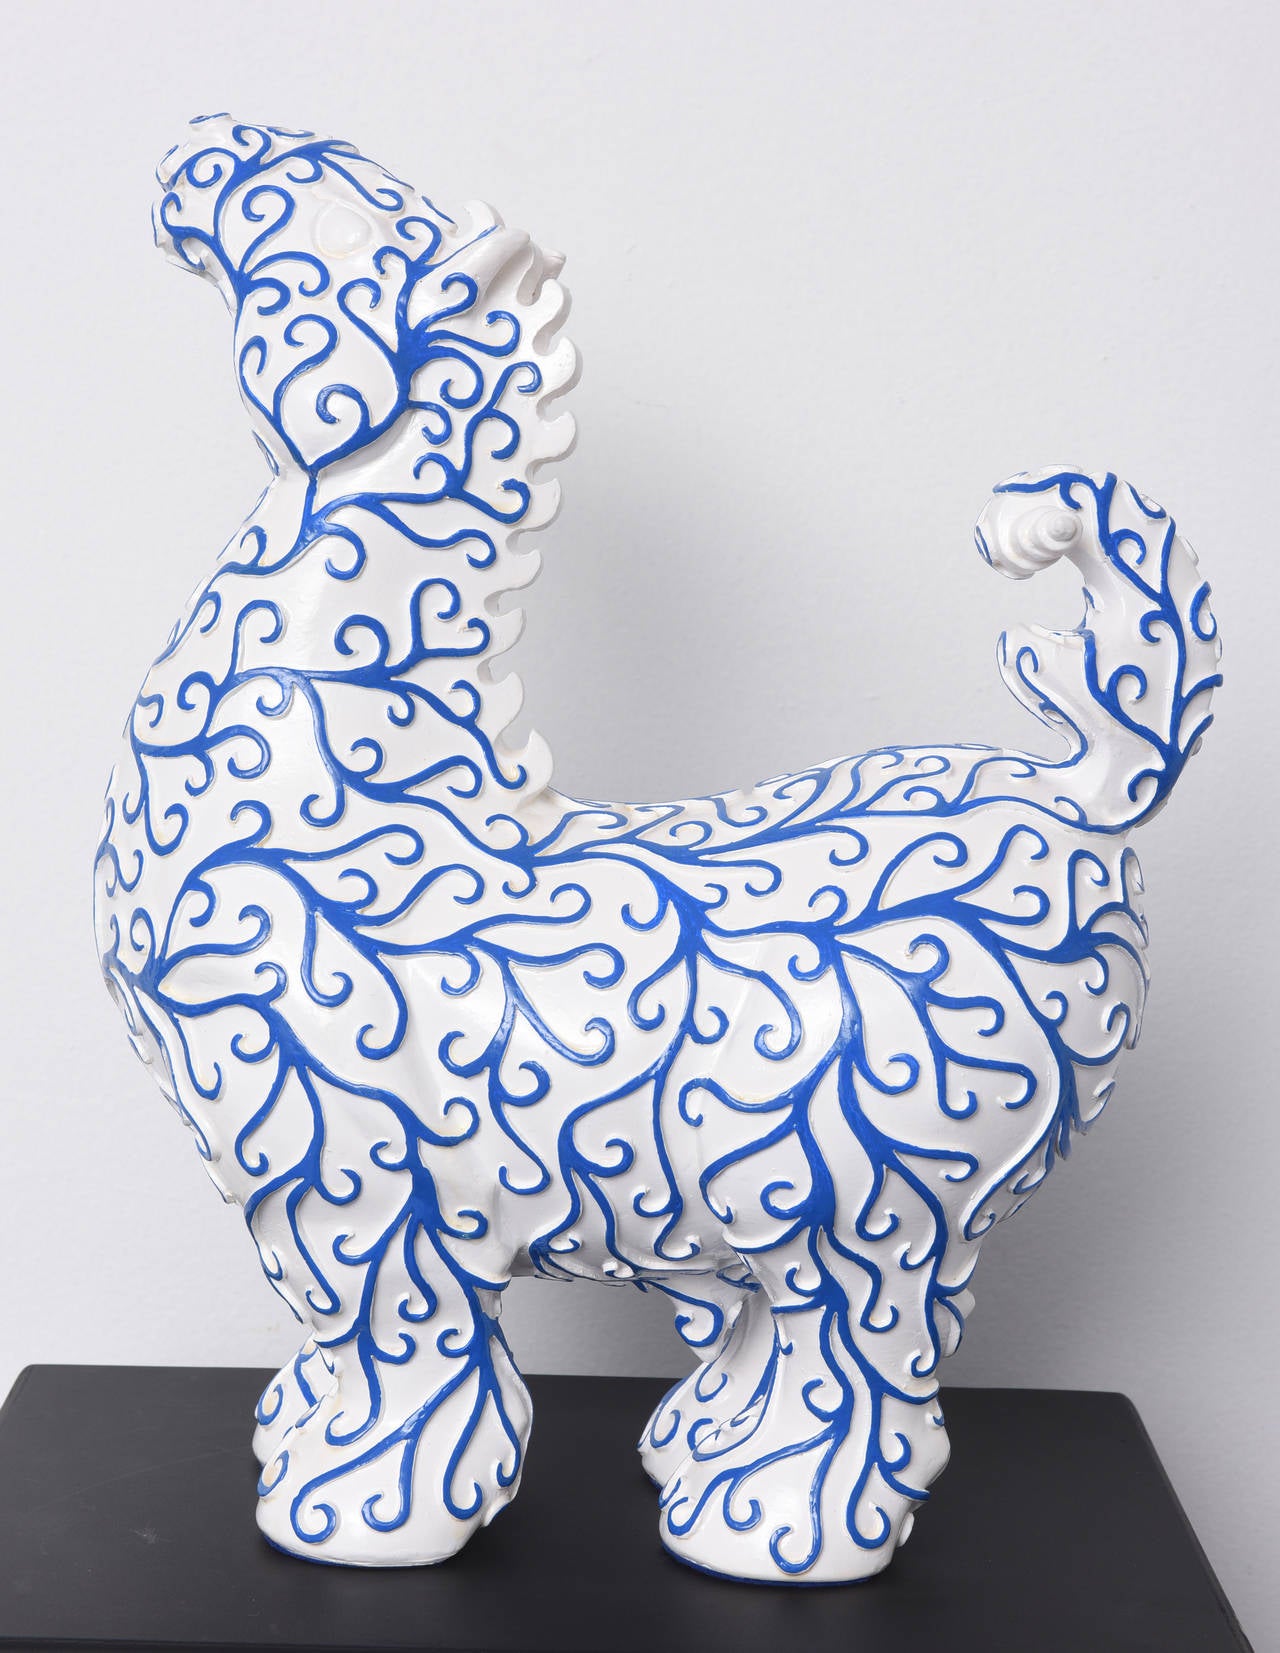 Arabesques Horse - Blue & White Resin sculpture